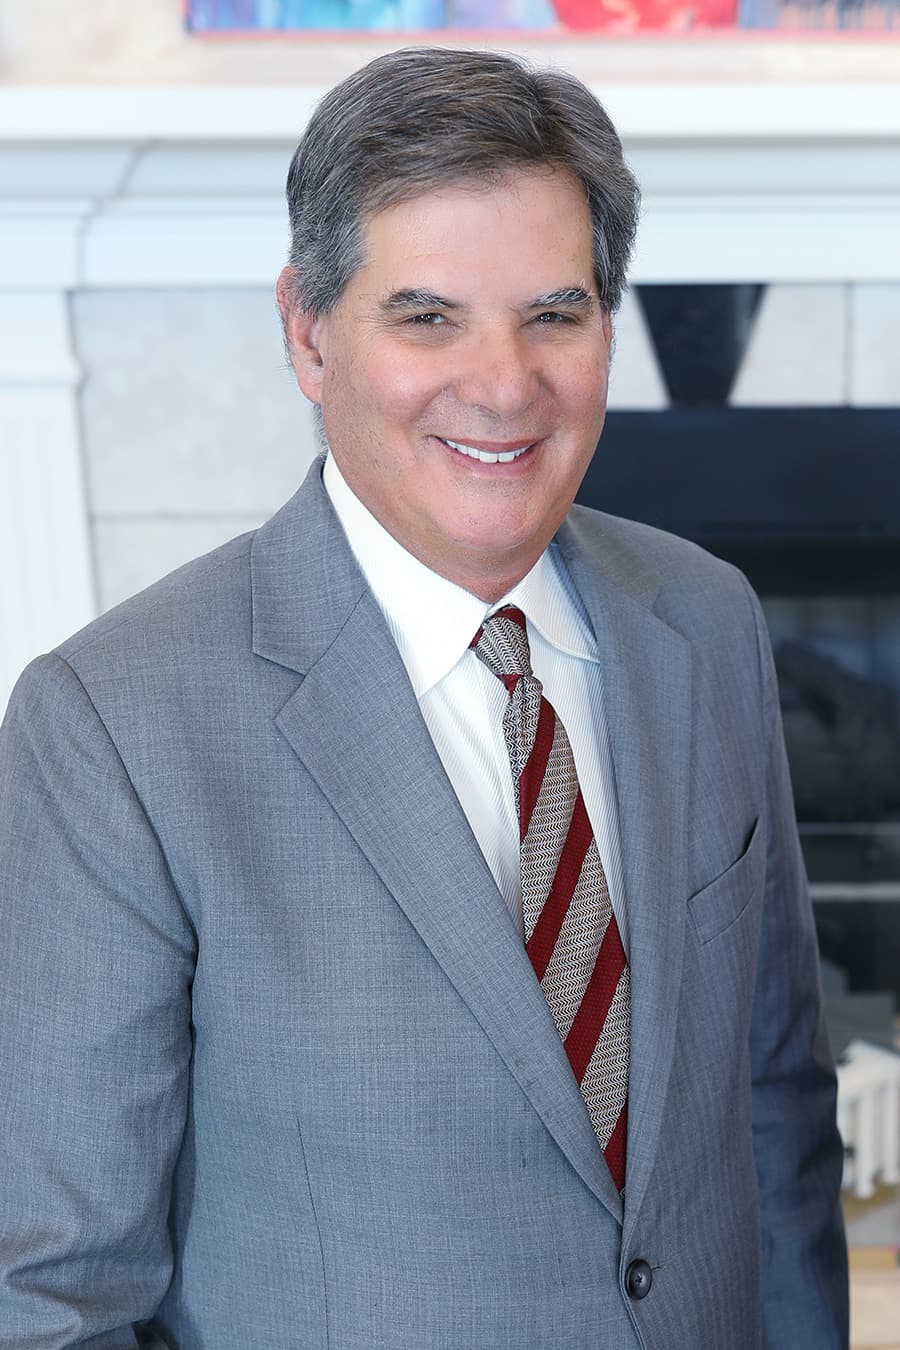 Cincinnati plastic surgeon Dr. Mark Mandell-Brown smiling wearing a gray suit